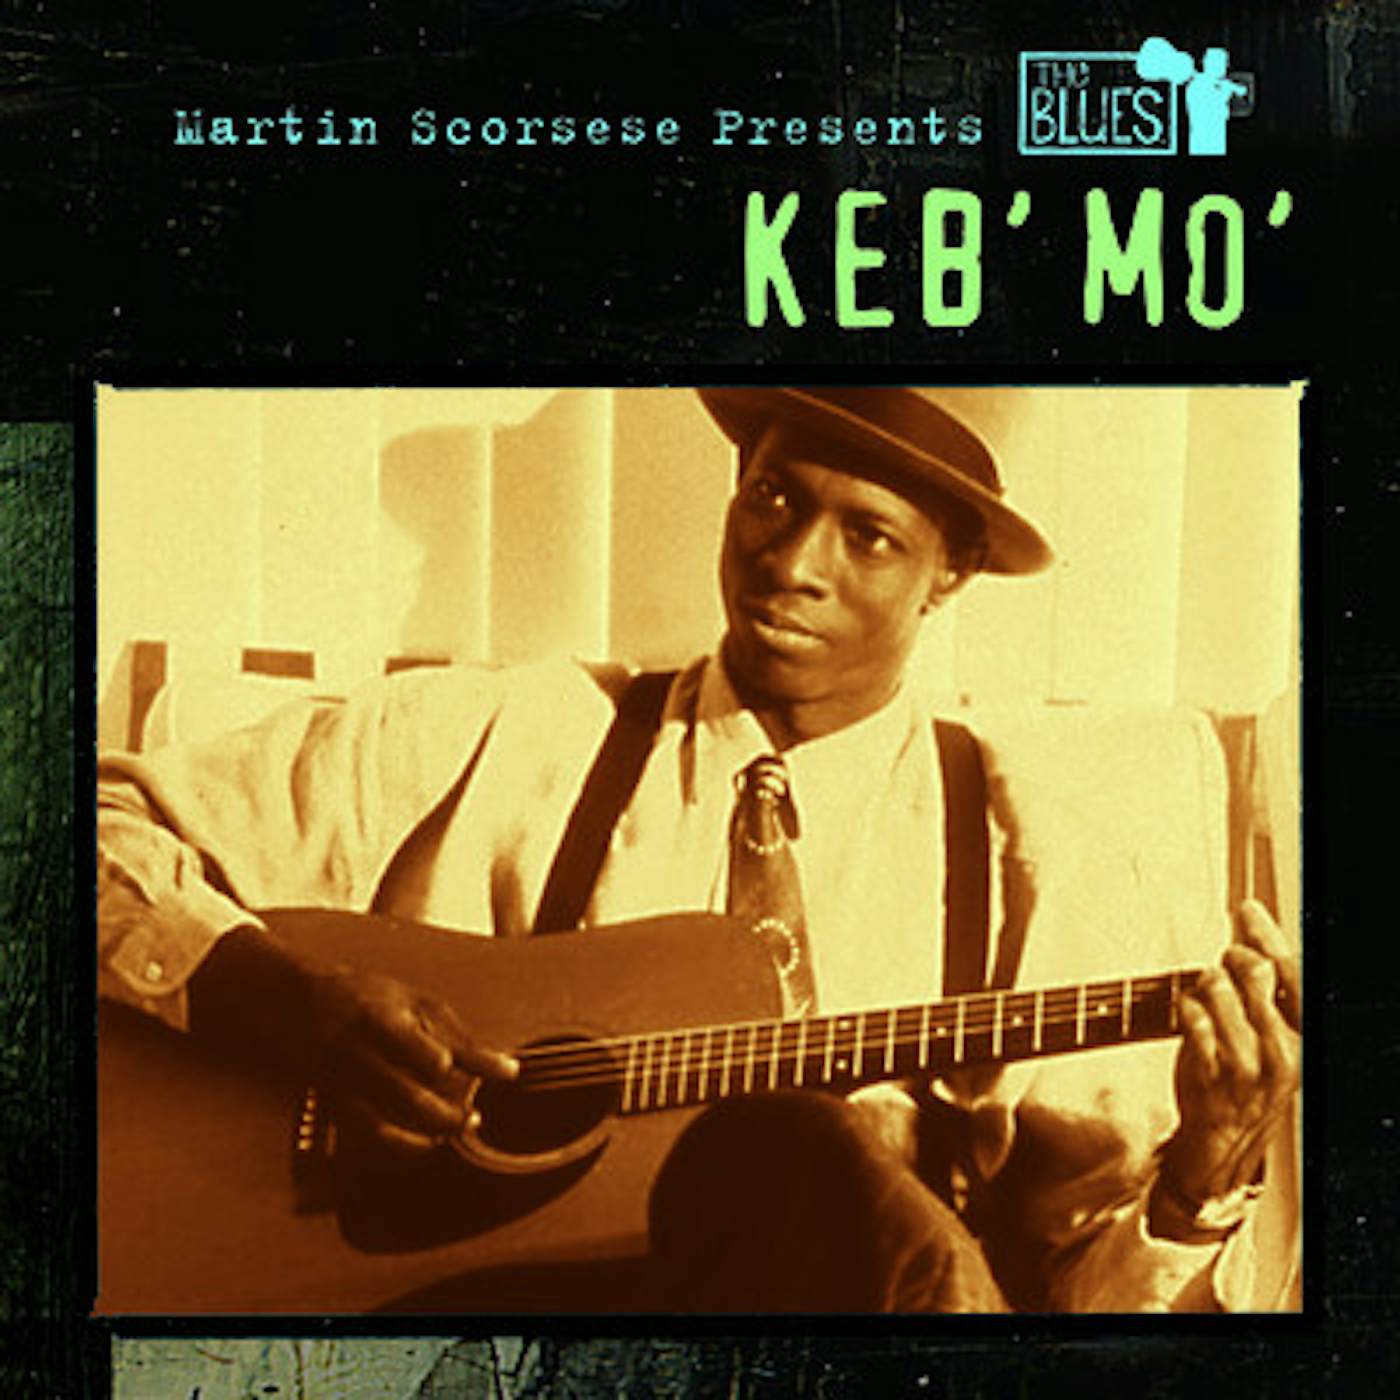 MARTIN SCORSESE PRESENTS THE BLUES: Keb' Mo' CD